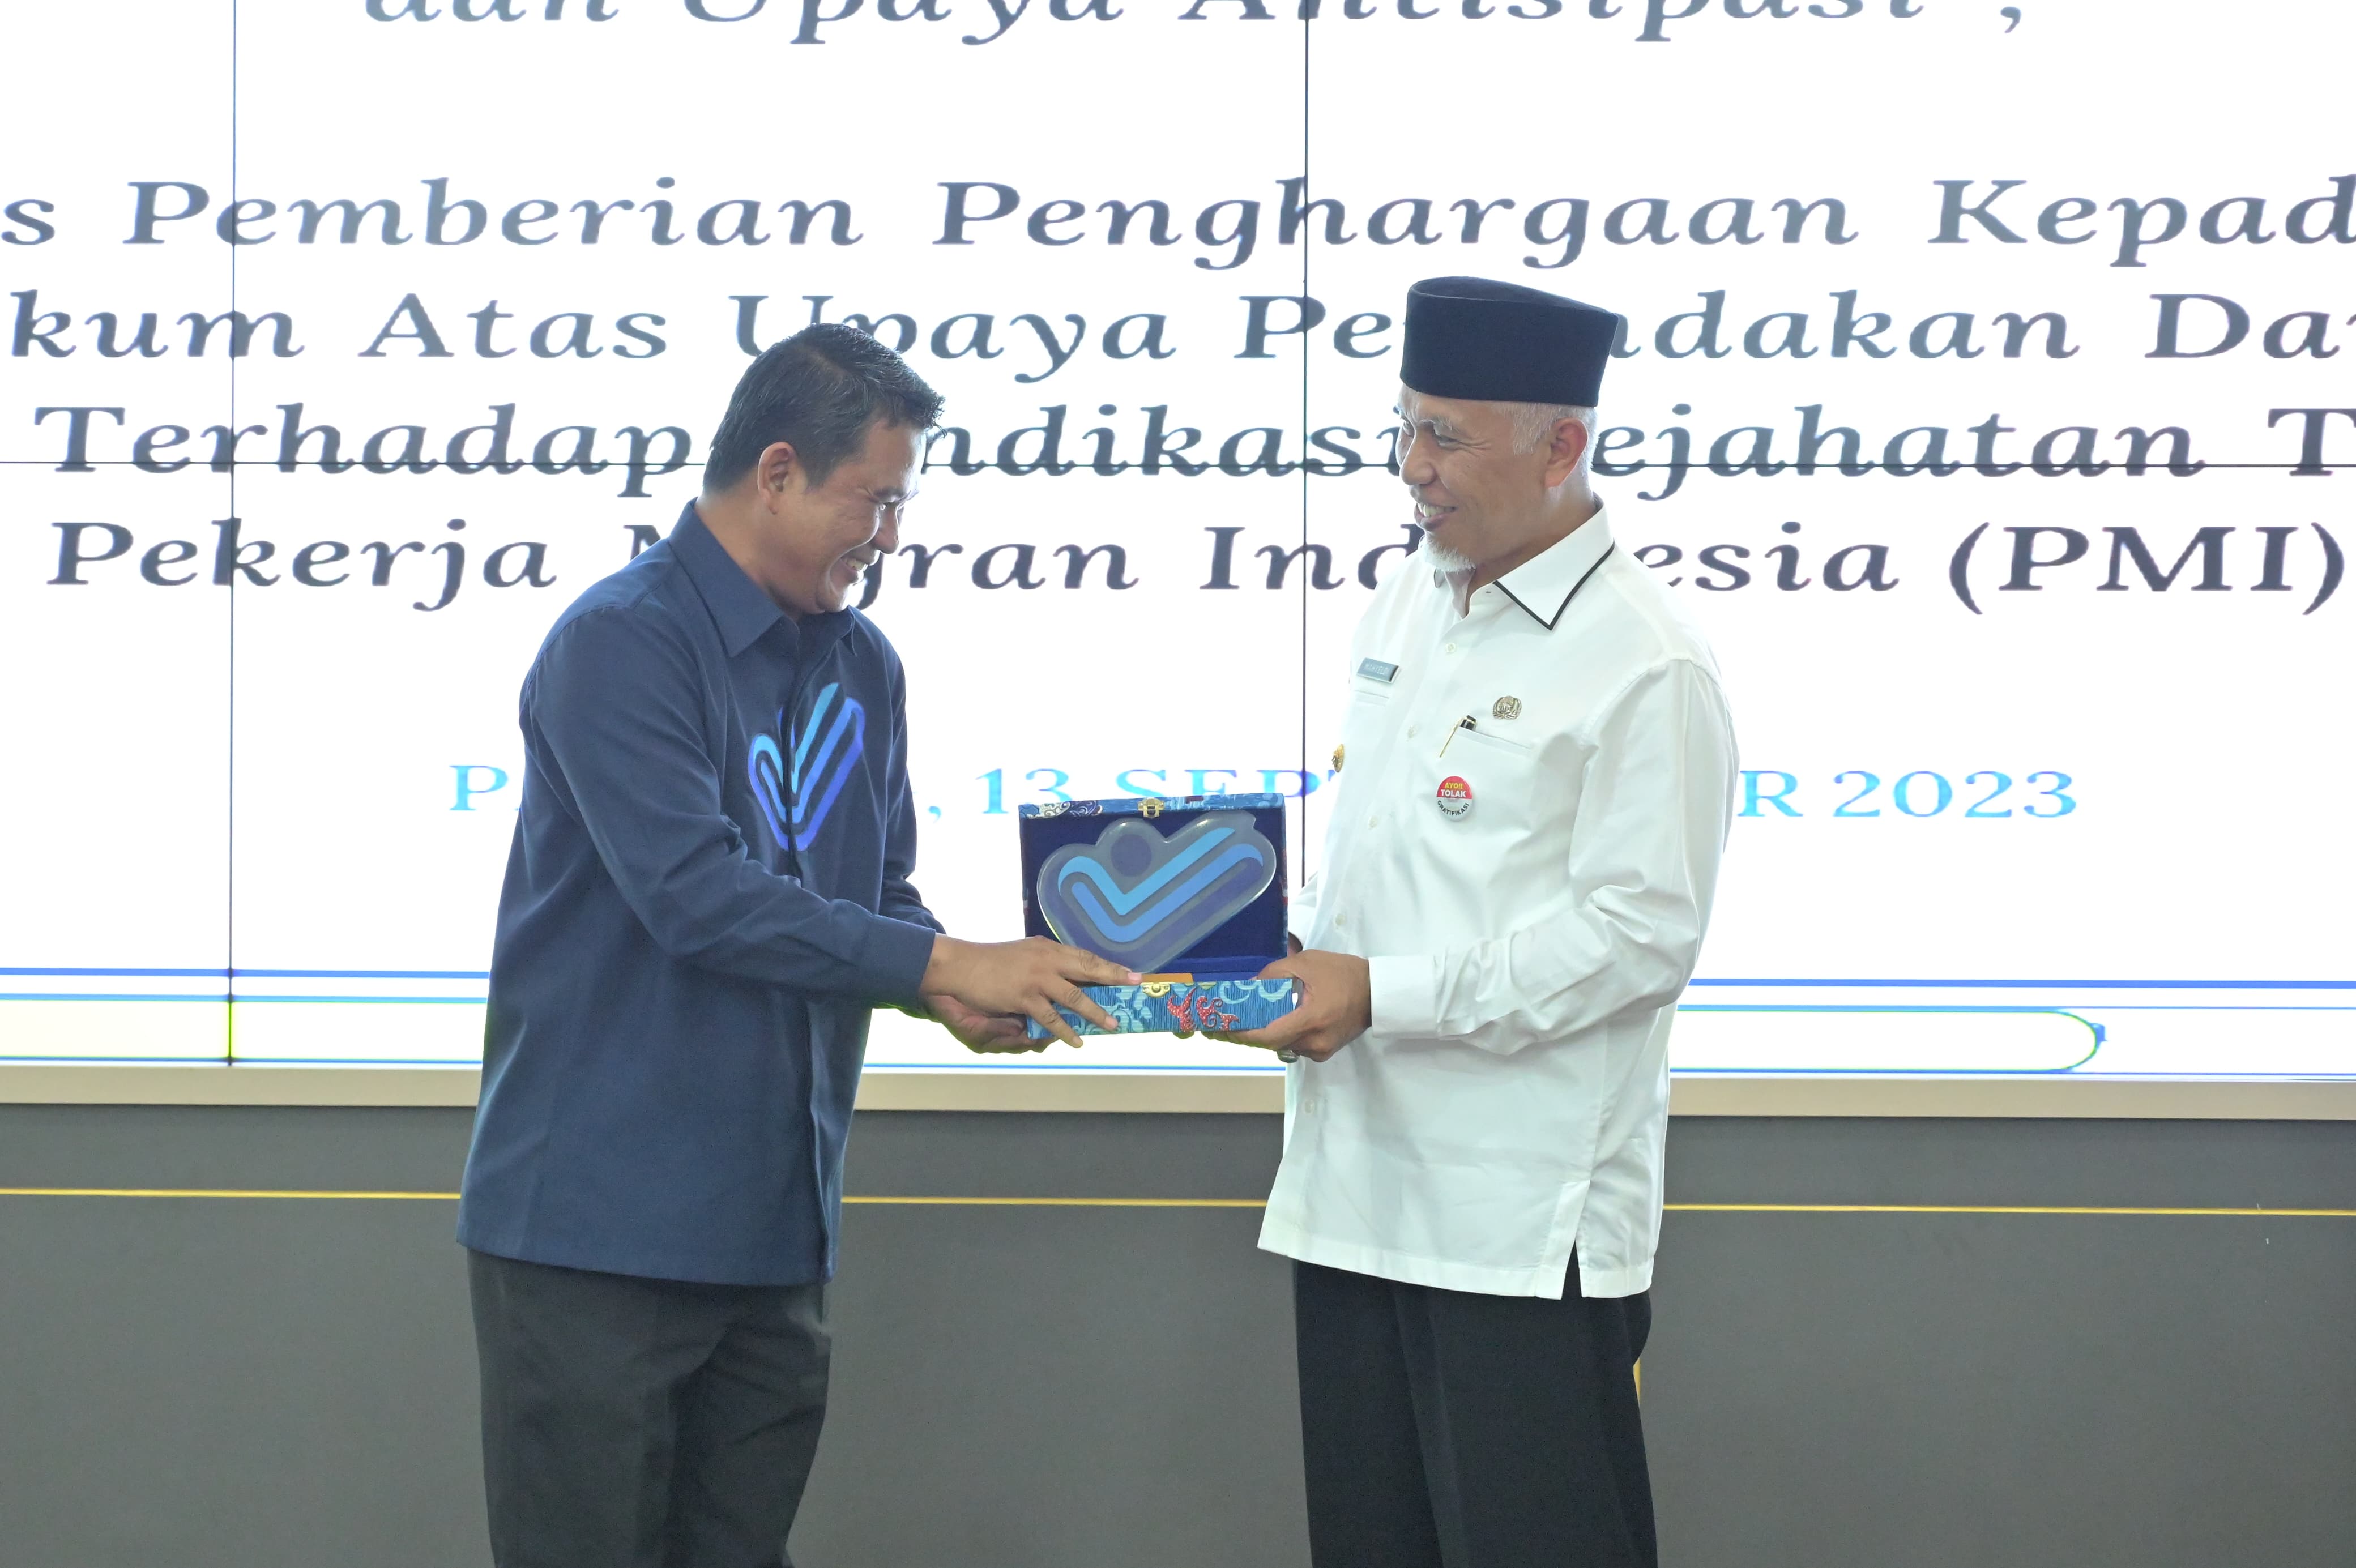 Gubernur Sumatera Barat, Mahyeldi Ansharullah, meraih penghargaan berkat upaya perlindungan dan penegakan hukum terhadap sindikasi kejahatan kepada Pekerja Migran Indonesia (PMI). Foto Adpsb. 